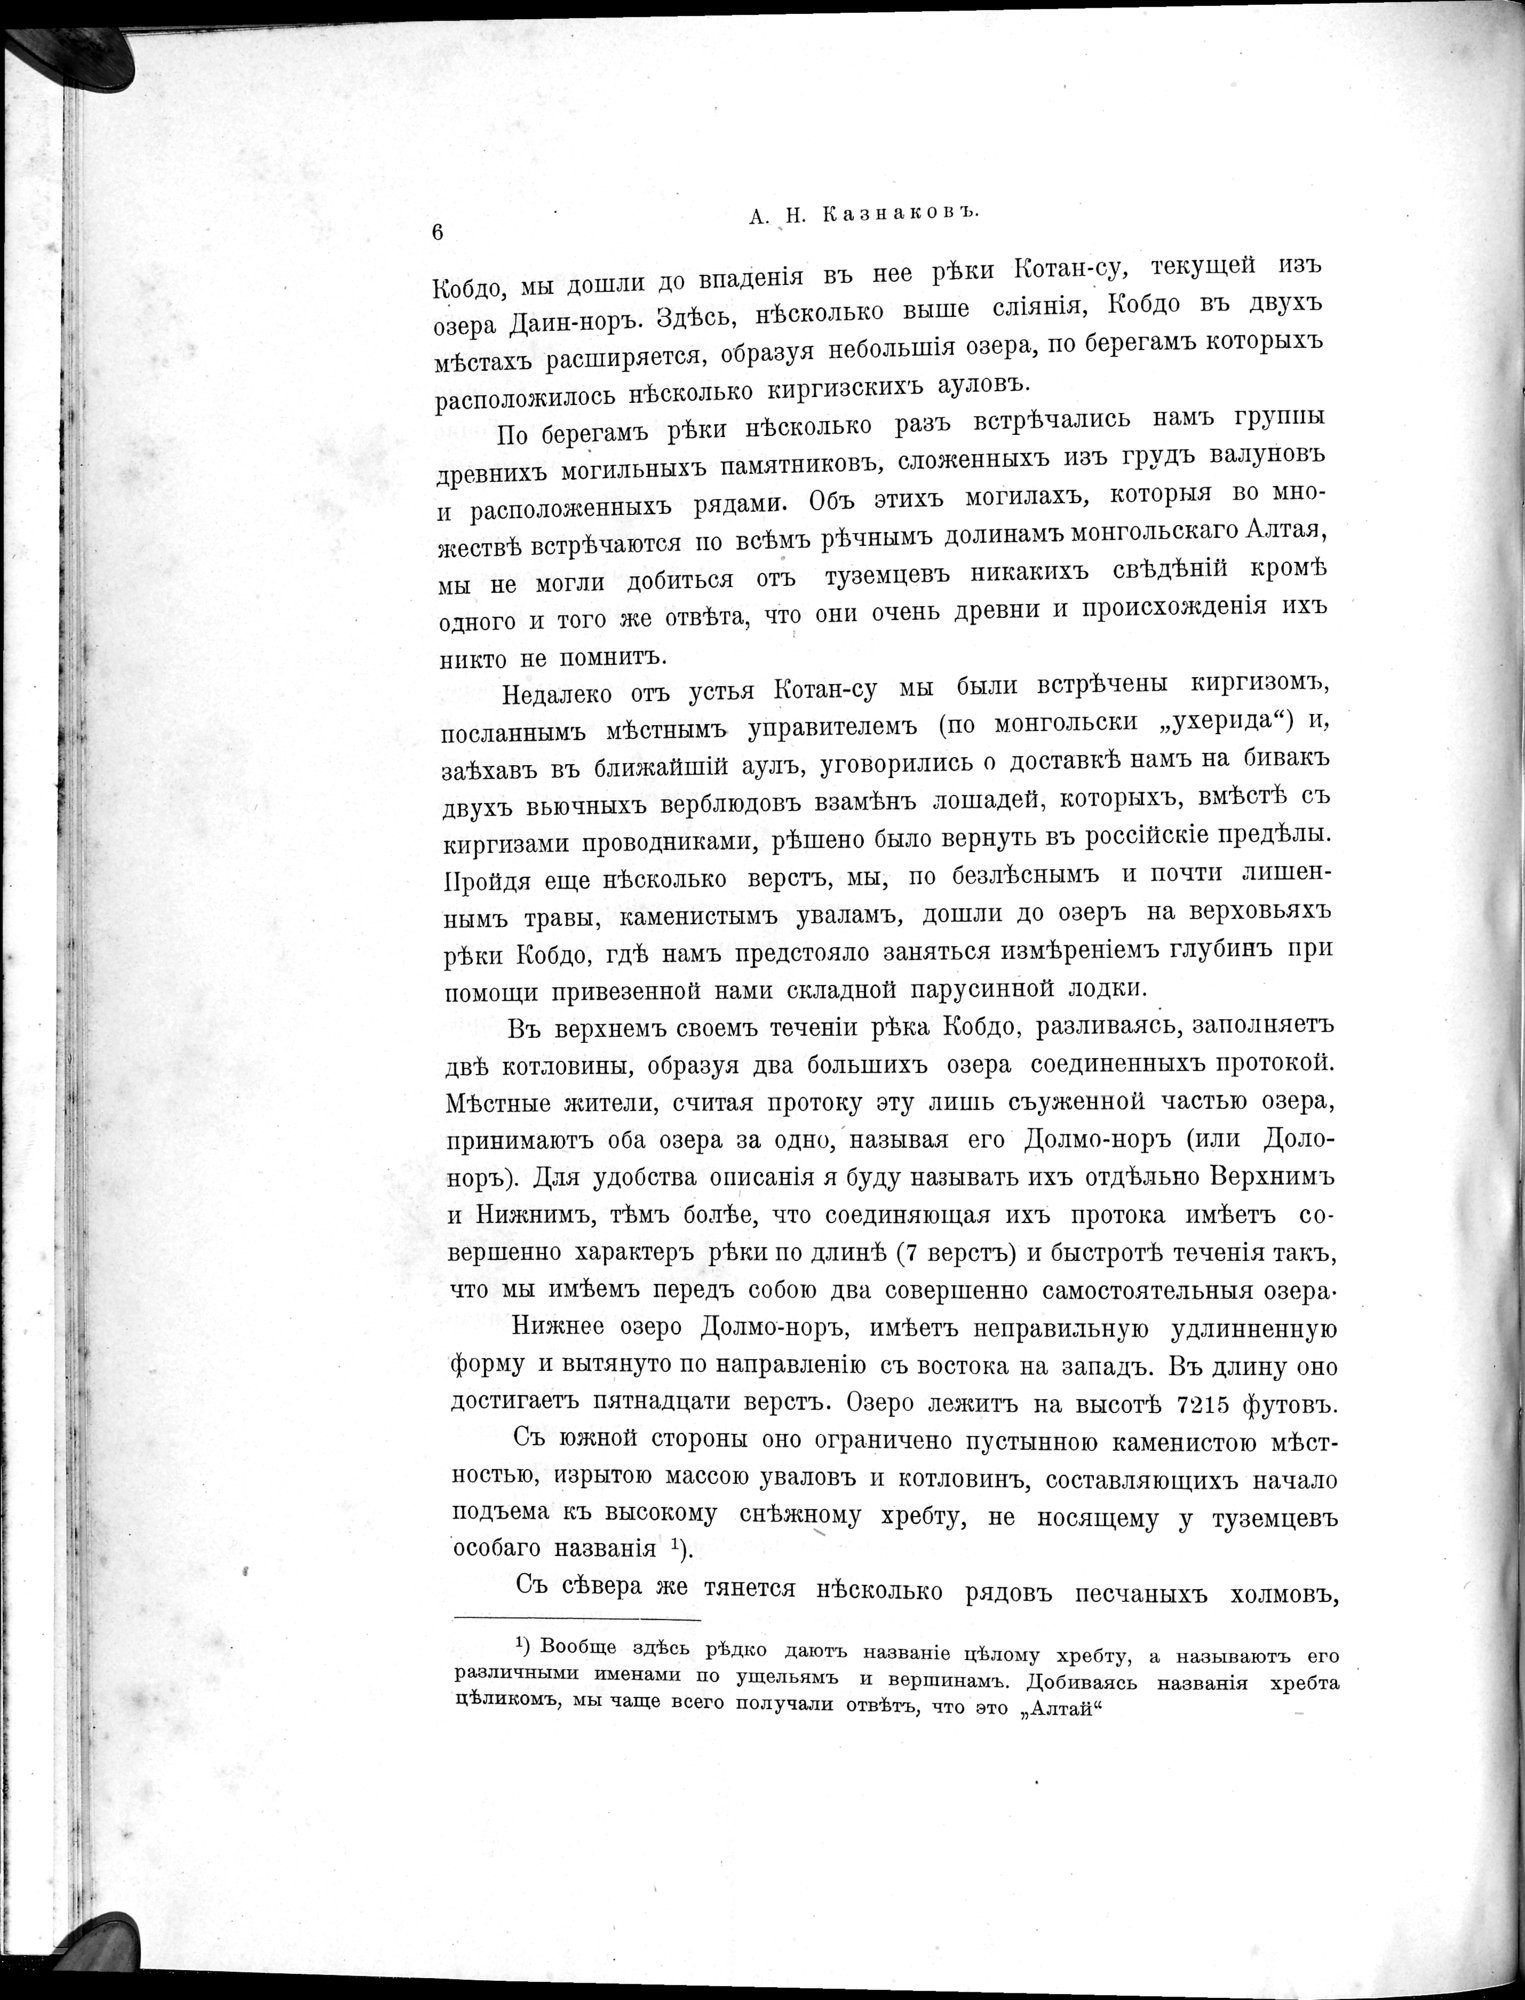 Mongoliia i Kam : vol.3 / Page 26 (Grayscale High Resolution Image)